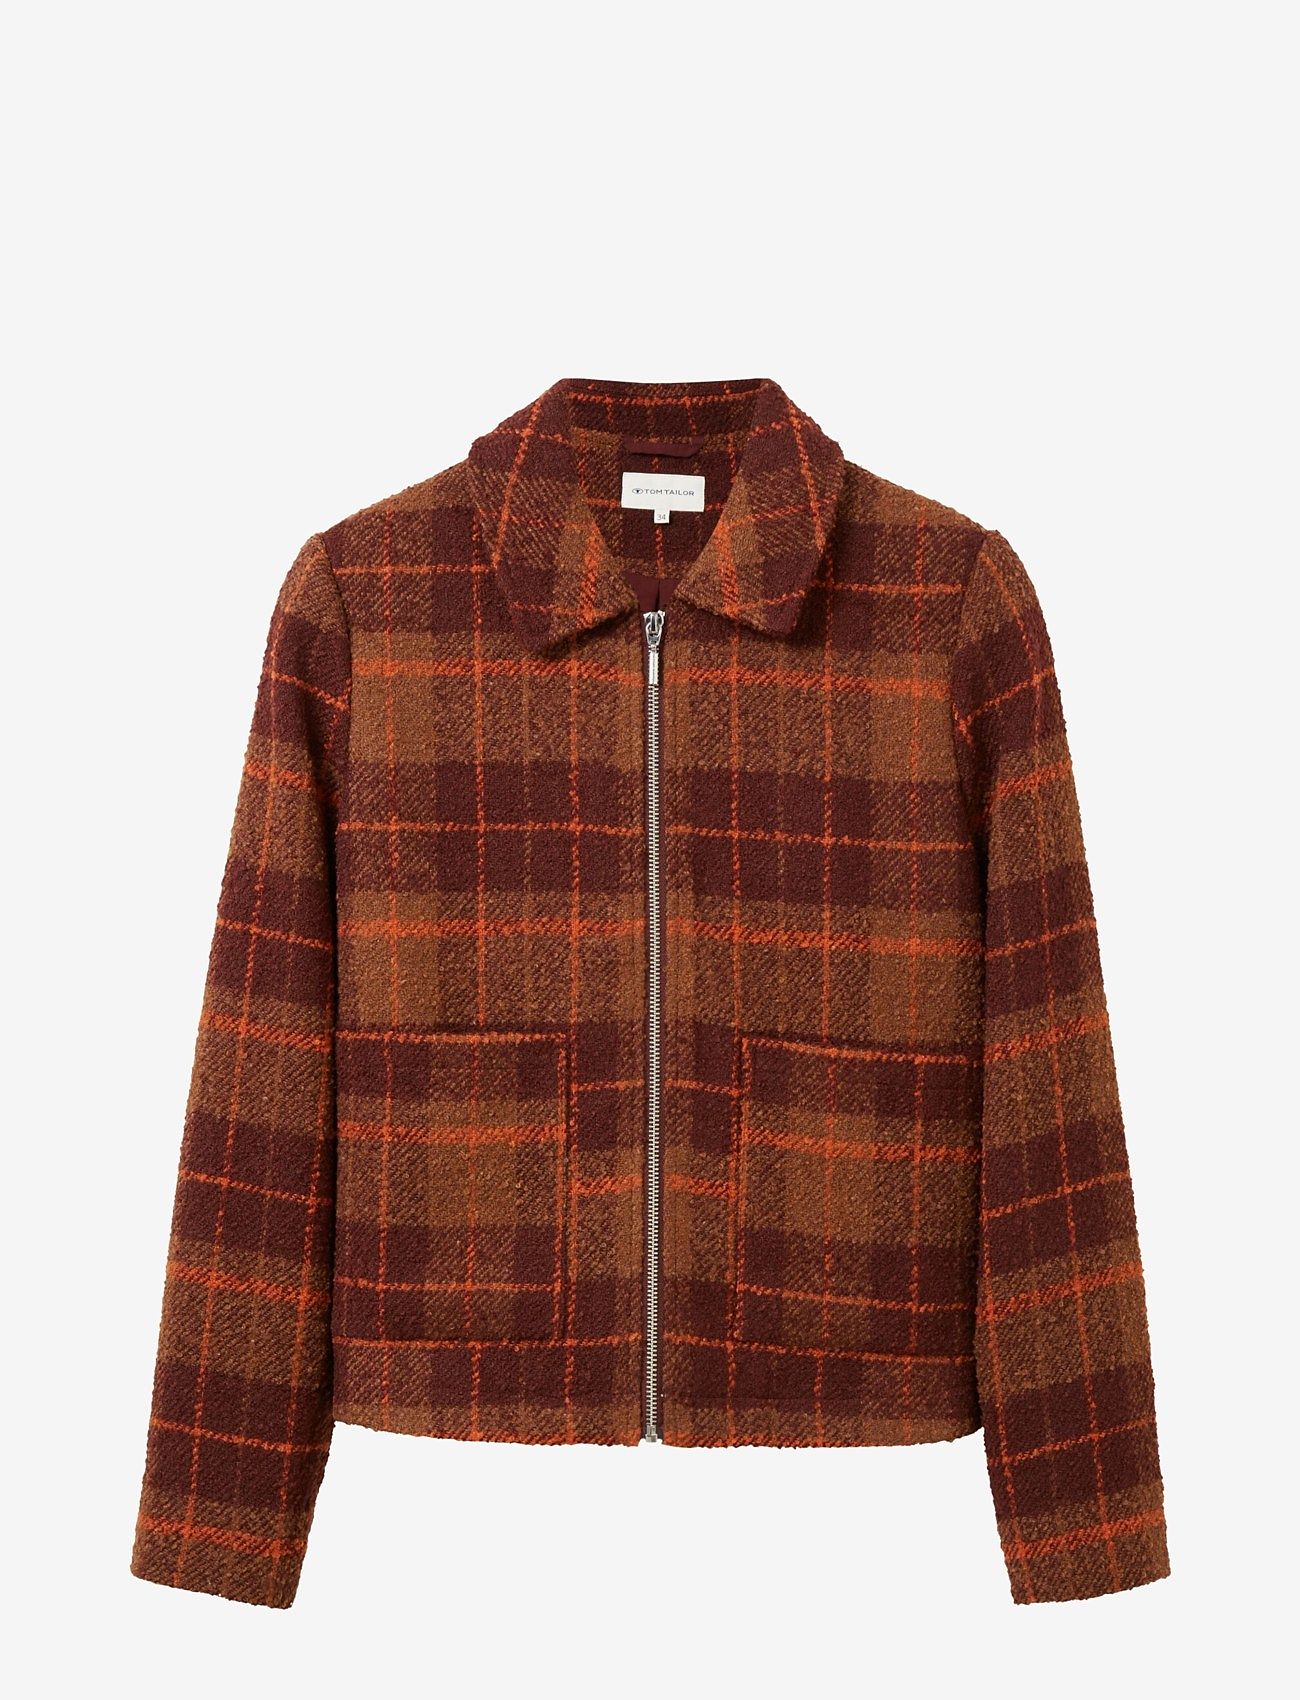 Tom Tailor - bouclé blazer jacket - wool jackets - brown orange boucle - 0